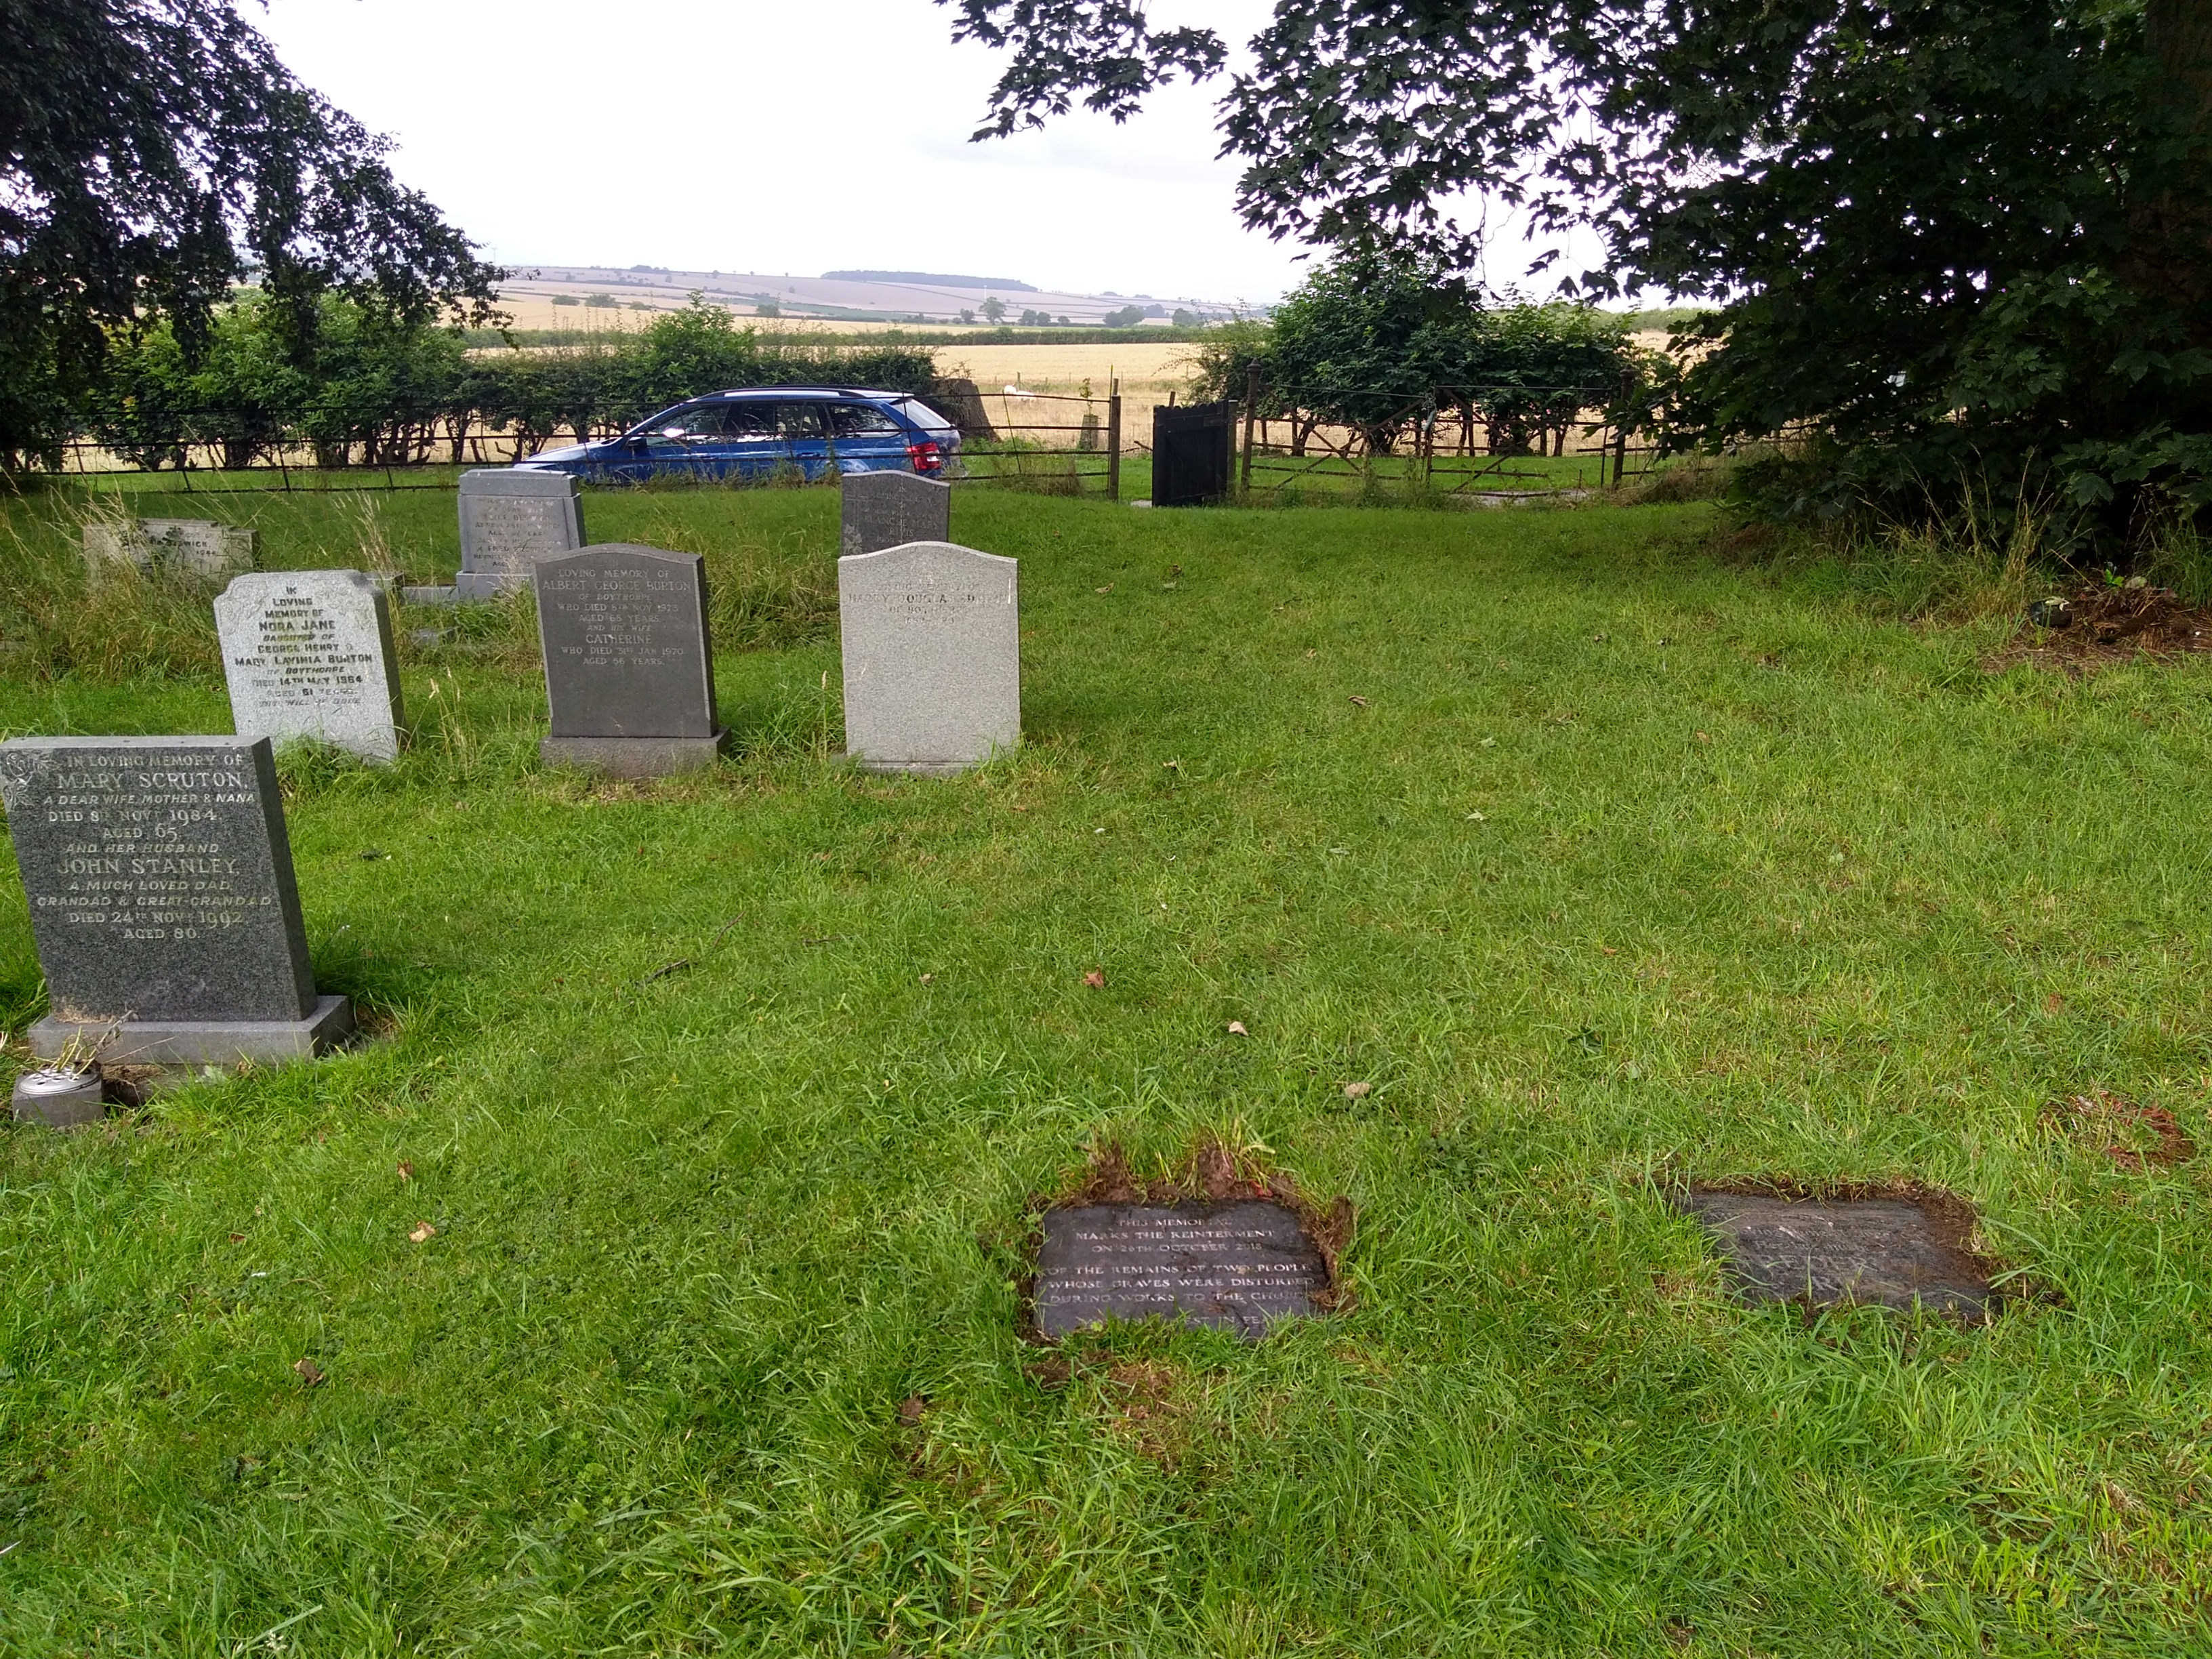 Grave marker context